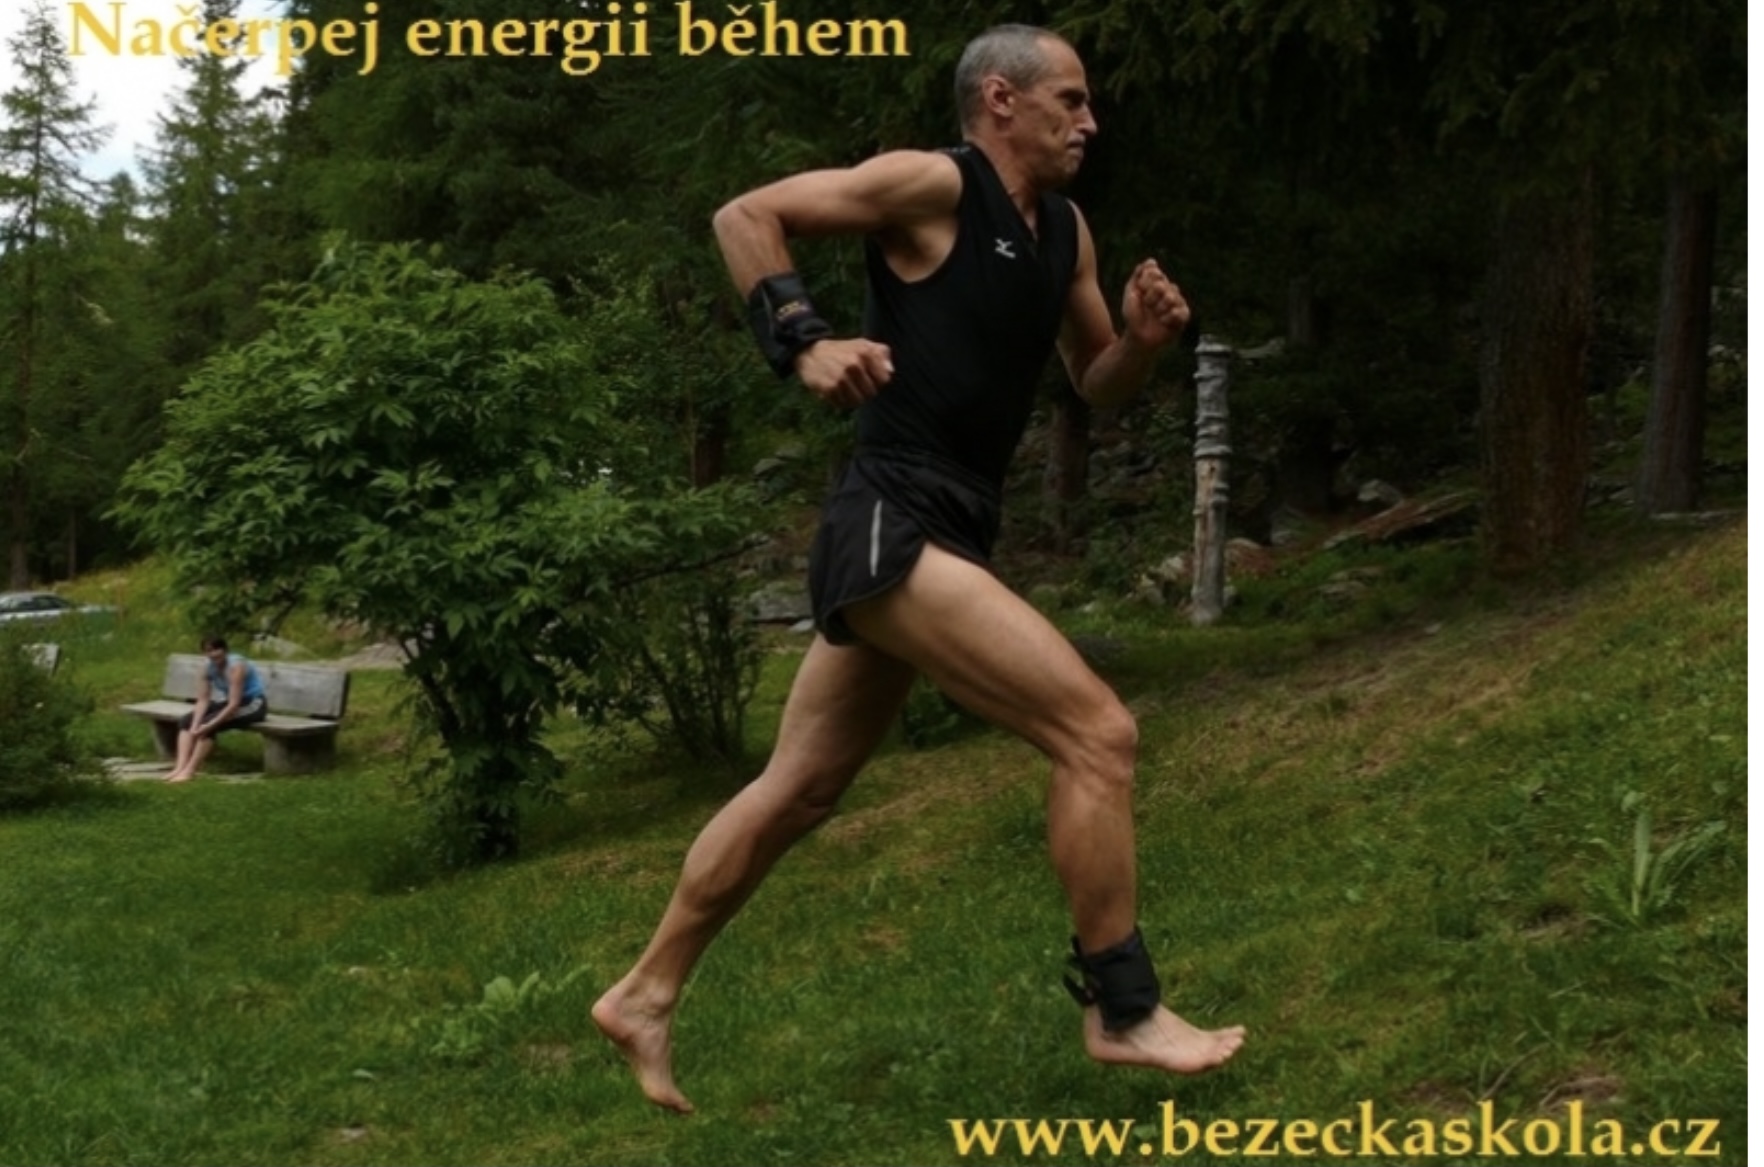 Běh a energie